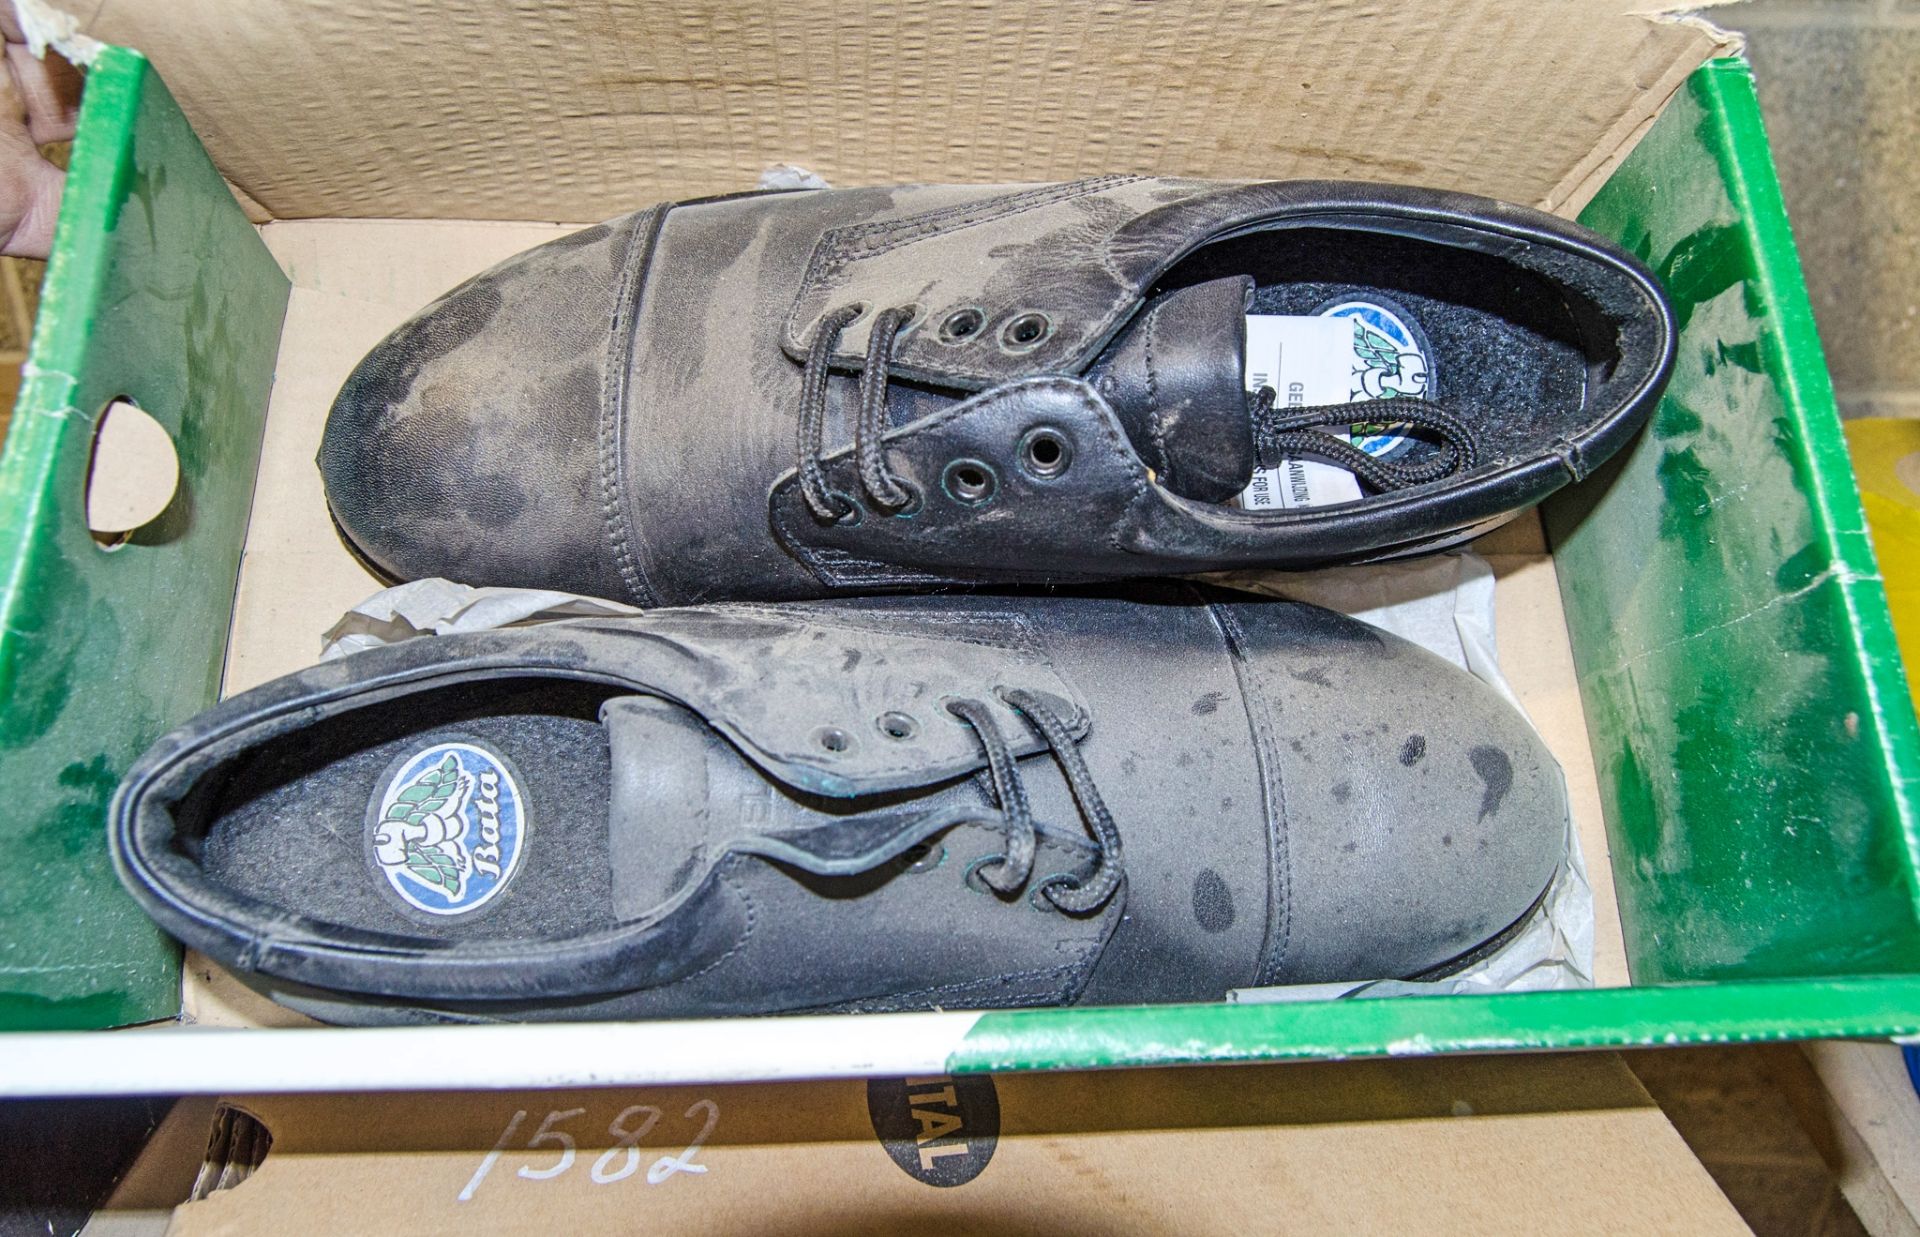 Pair of size 8 Bata steel toe cap work shoes